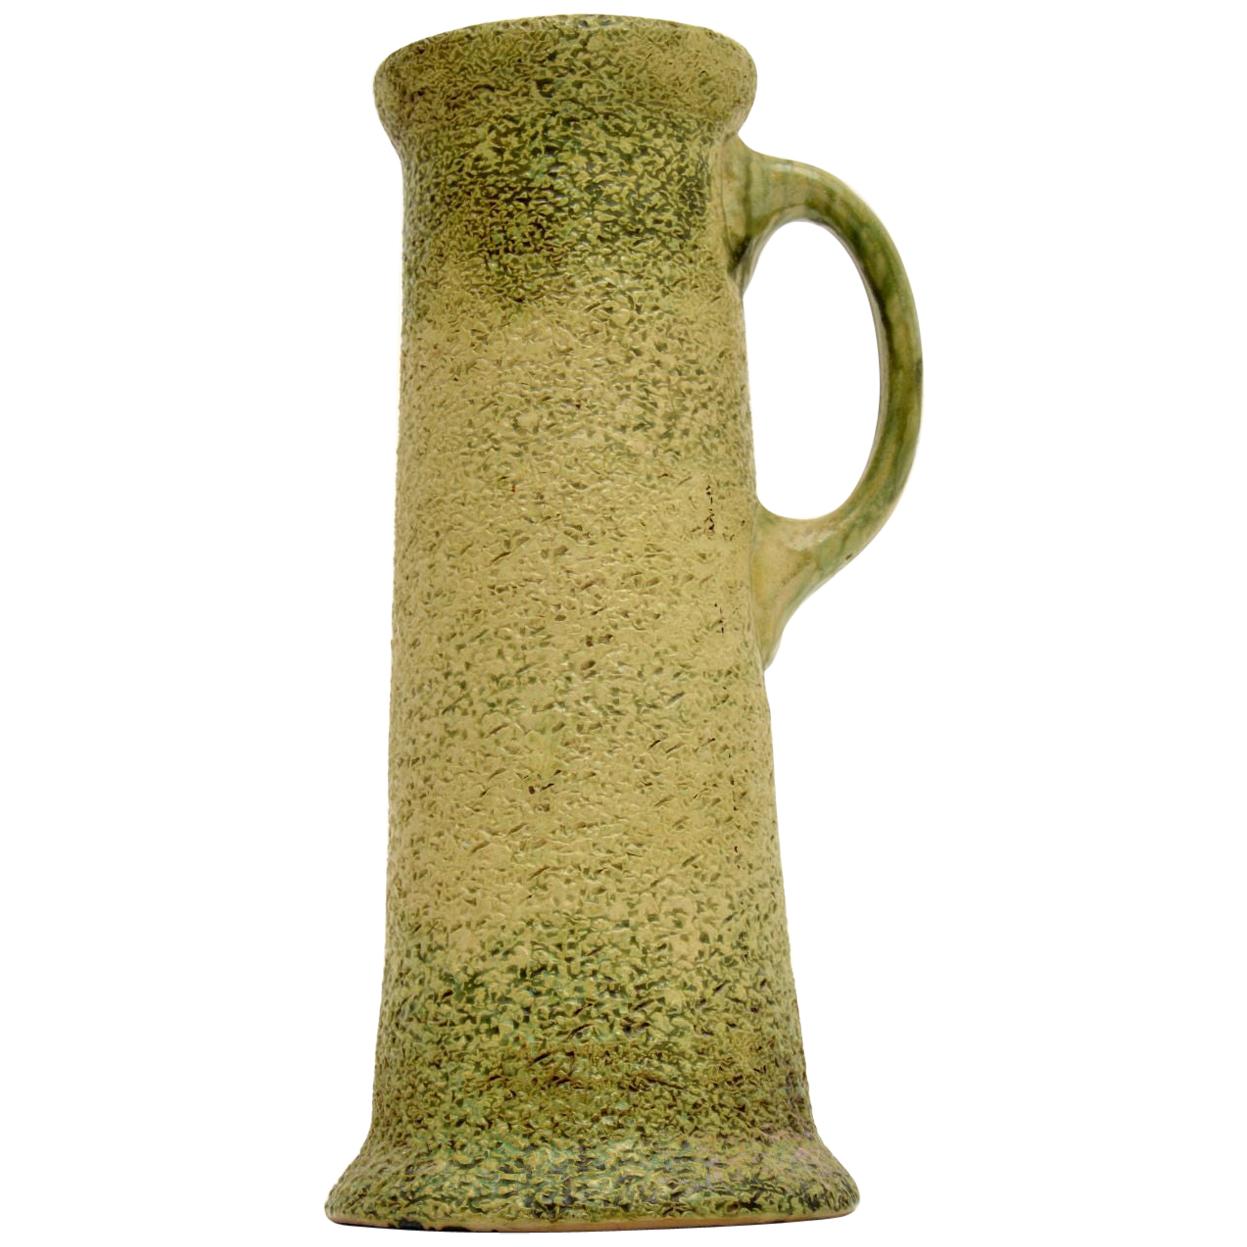 Großer glasierter Keramikkrug / Vase im Vintage-Stil